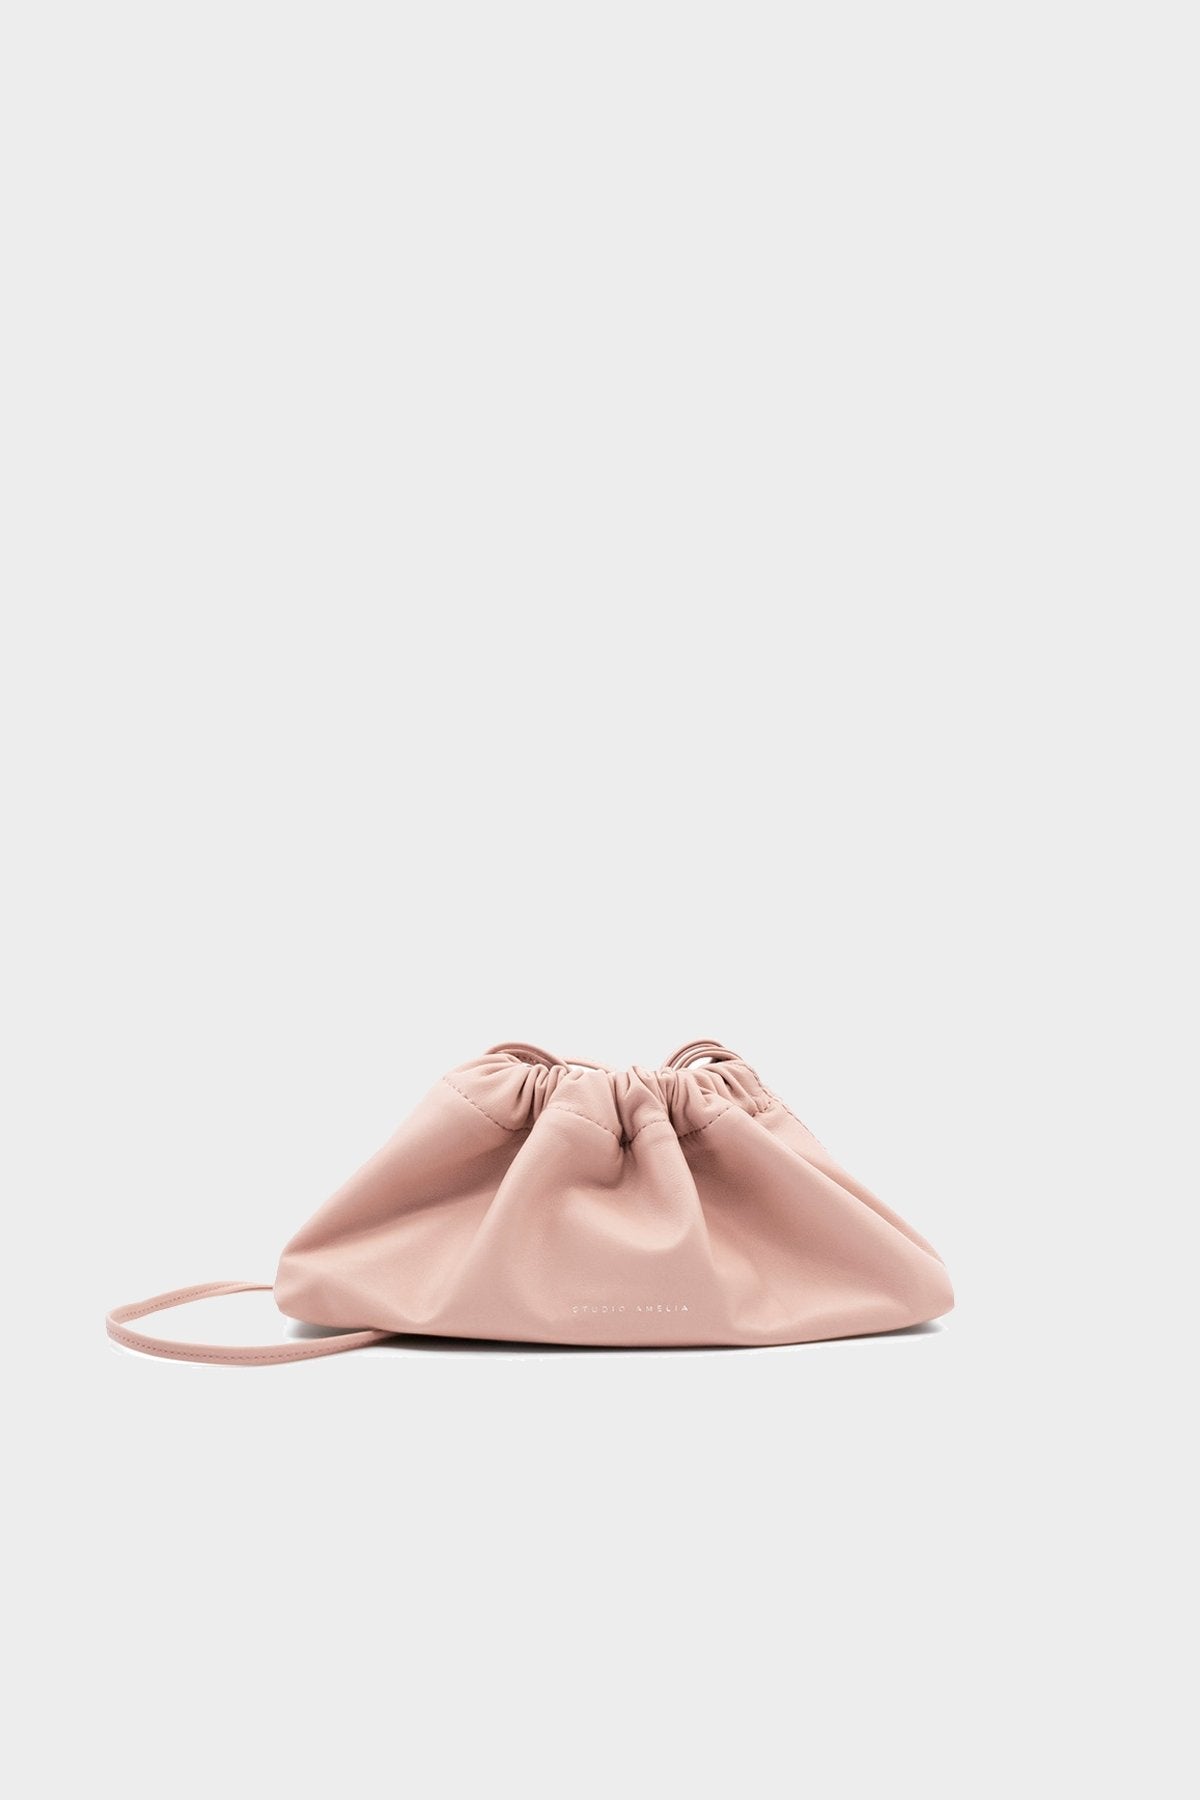 Mini Drawstring Bag in Rose - shop-olivia.com